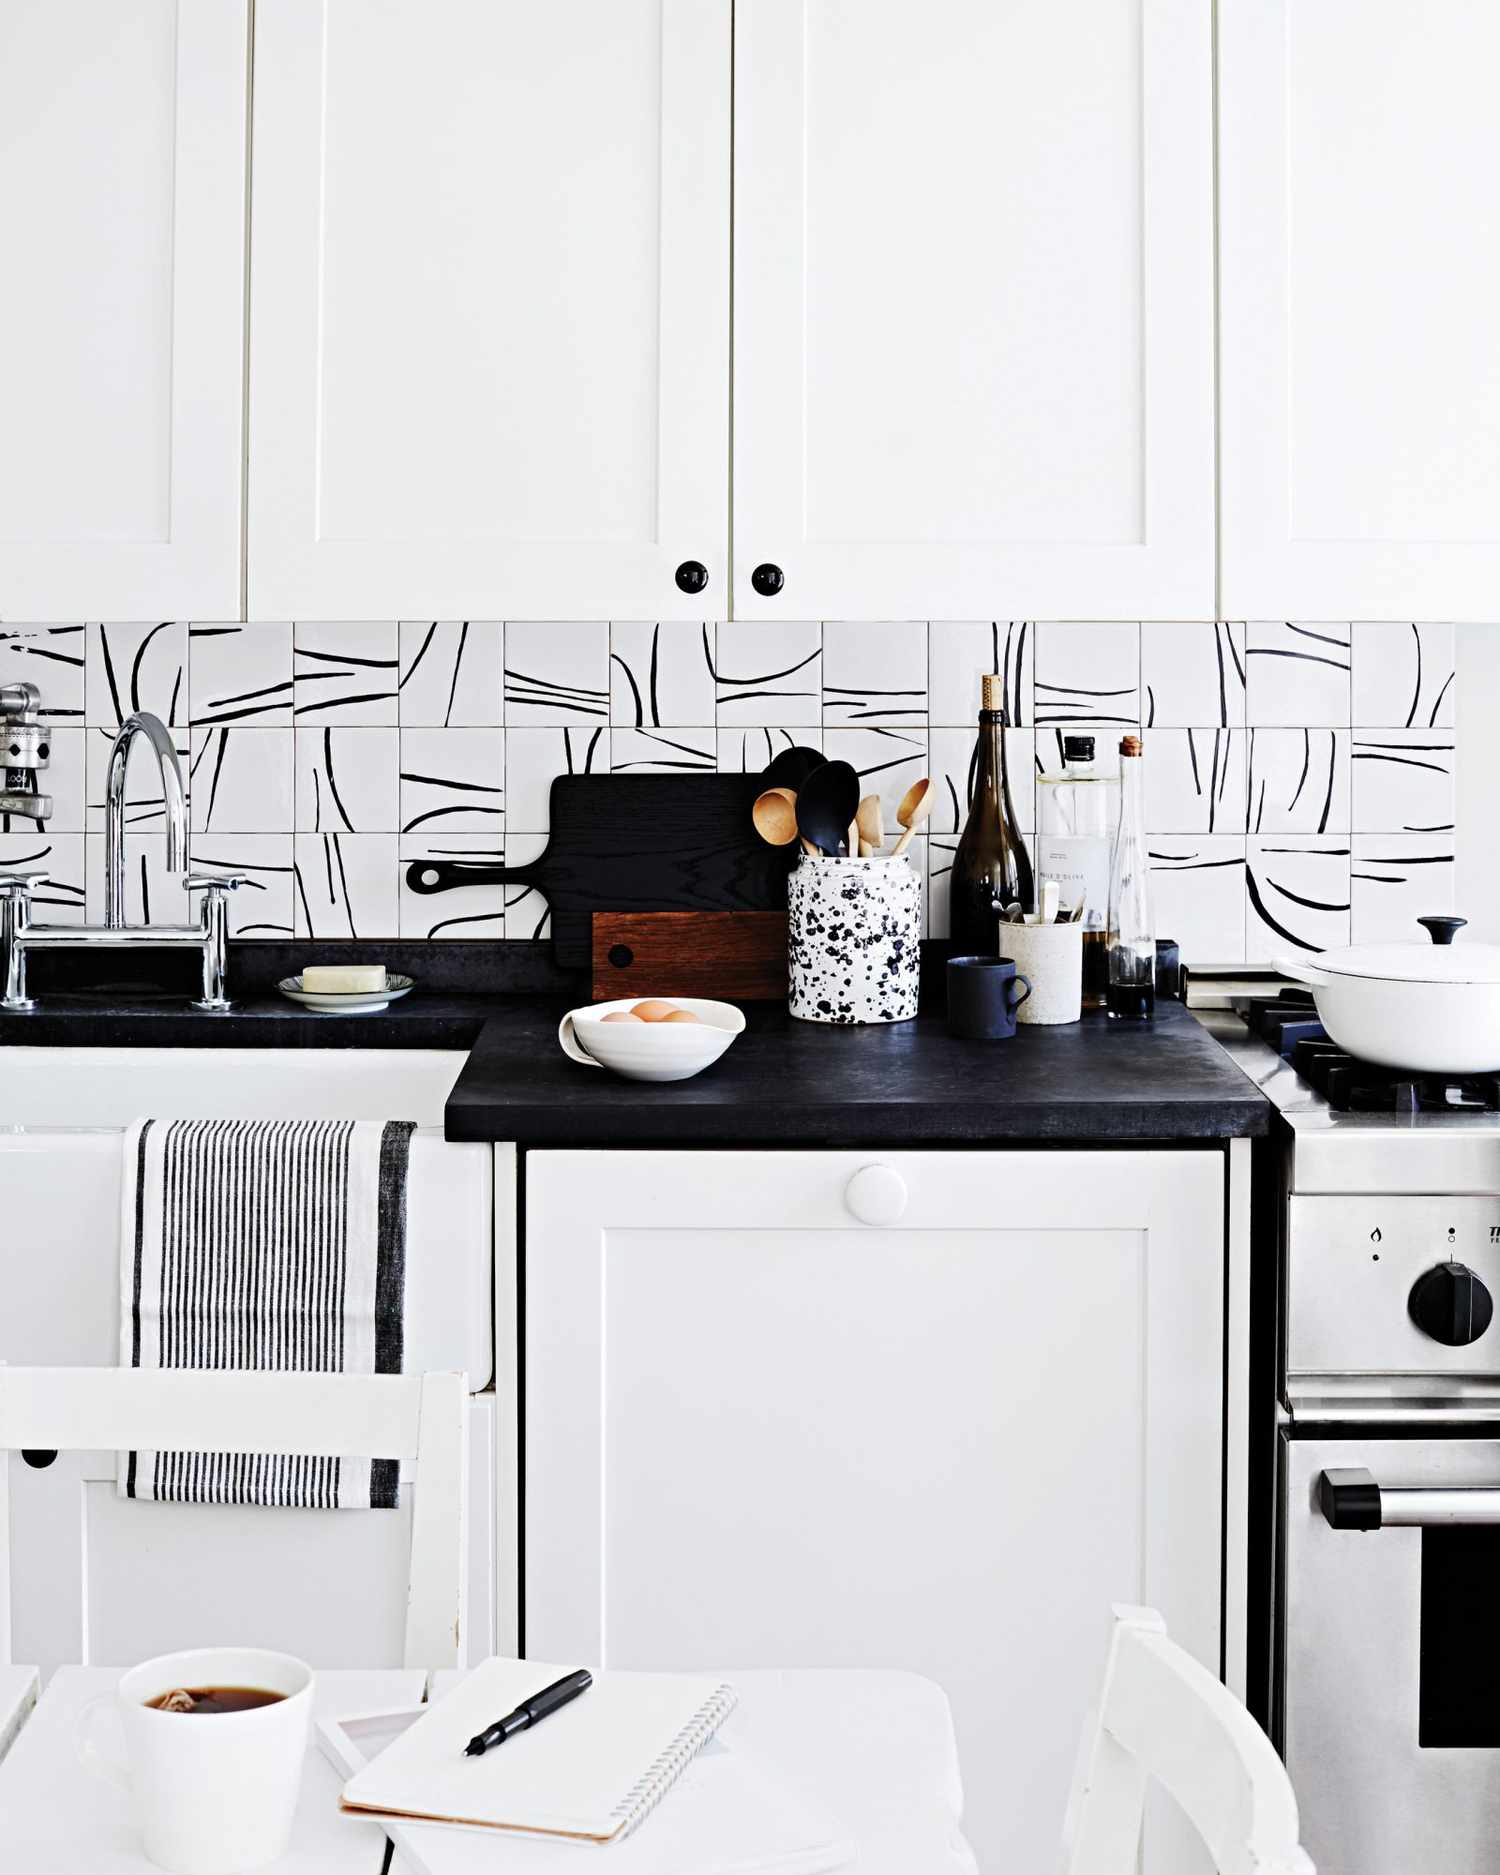 black-white-backsplash-kitchen-9156-d113008.jpg